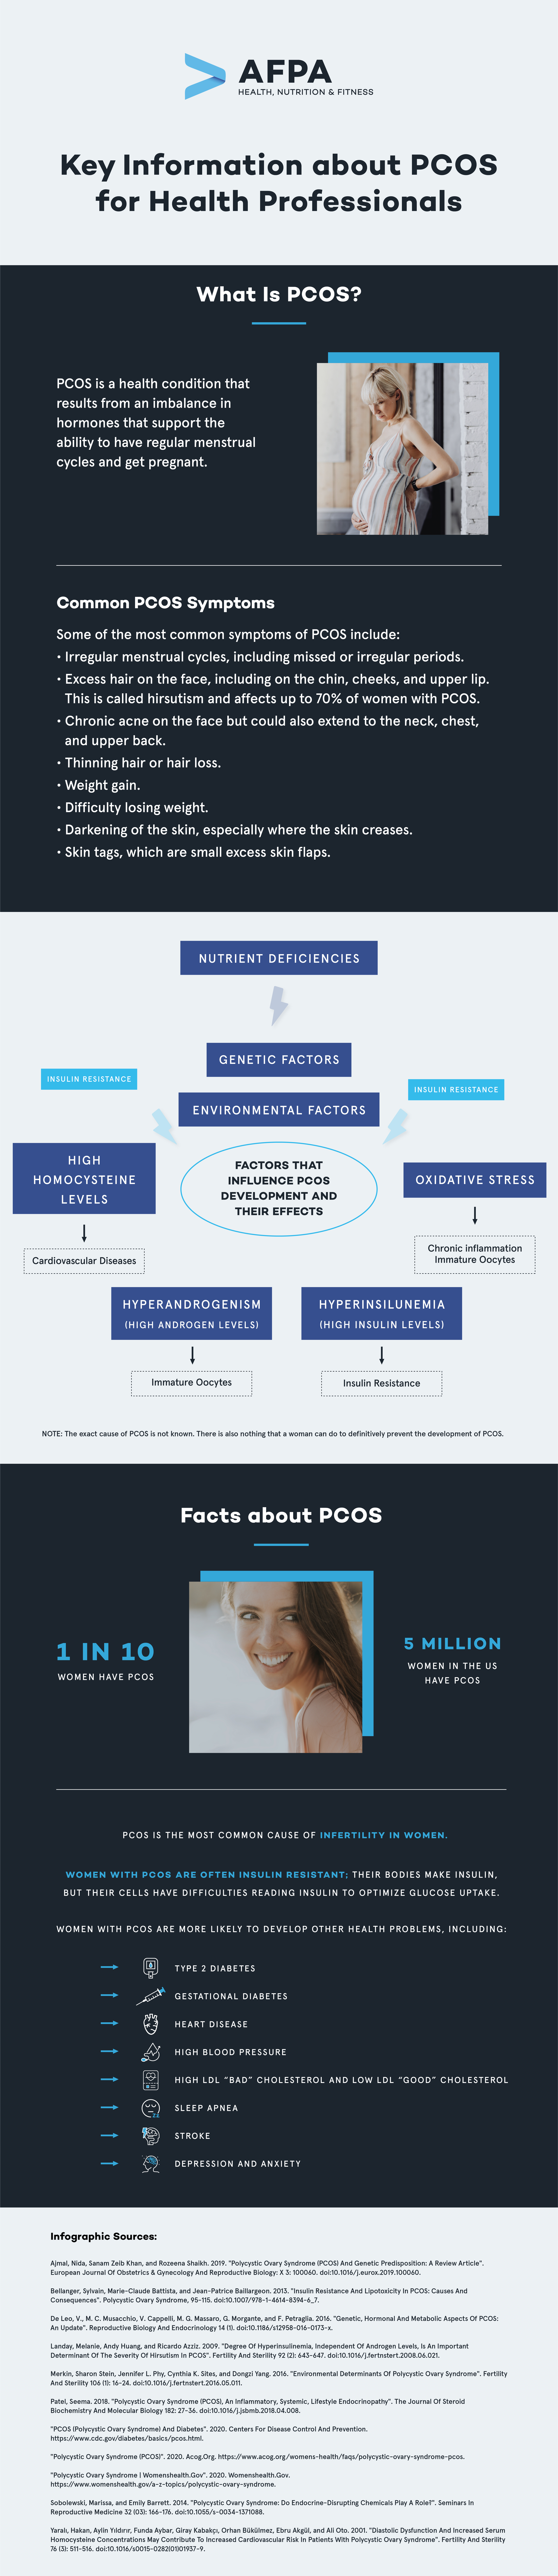 Key Information about PCOS_V2